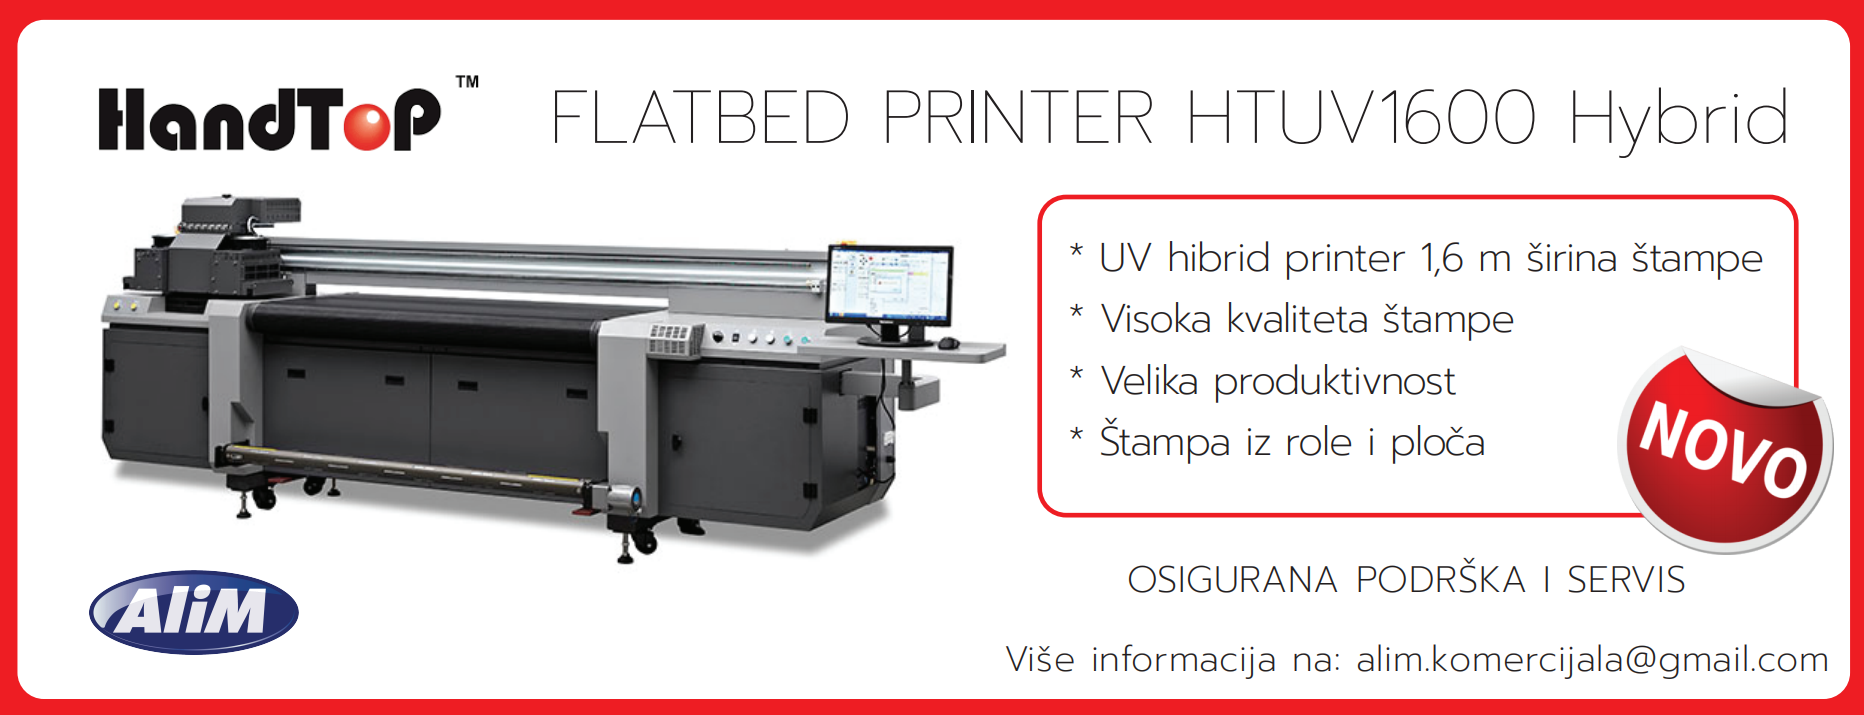 handtop flatbed printer